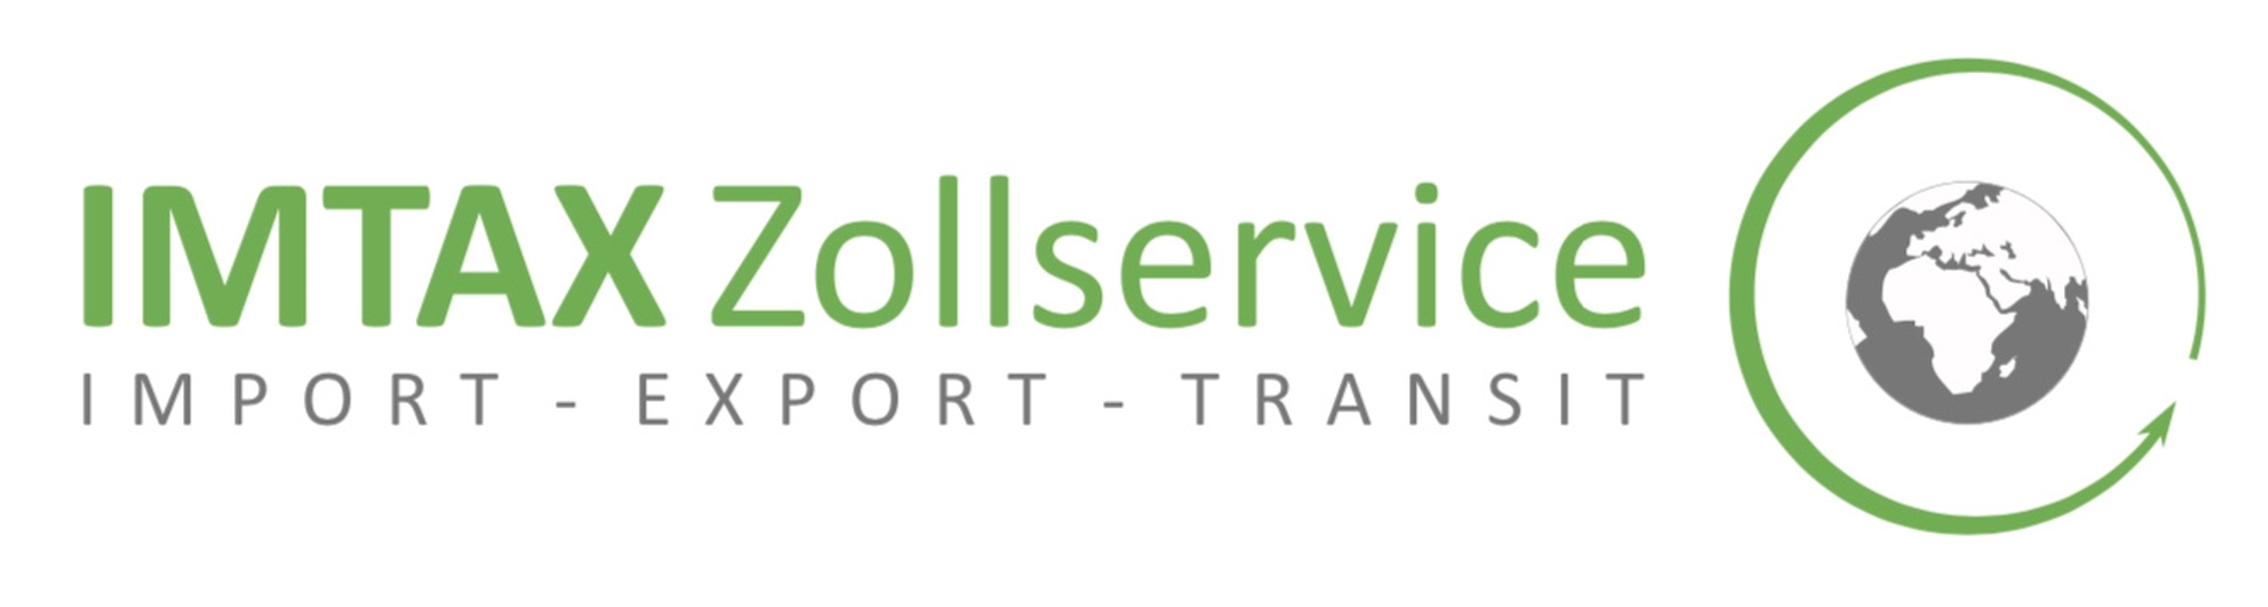 IMTAX Zollservice GmbH Logo